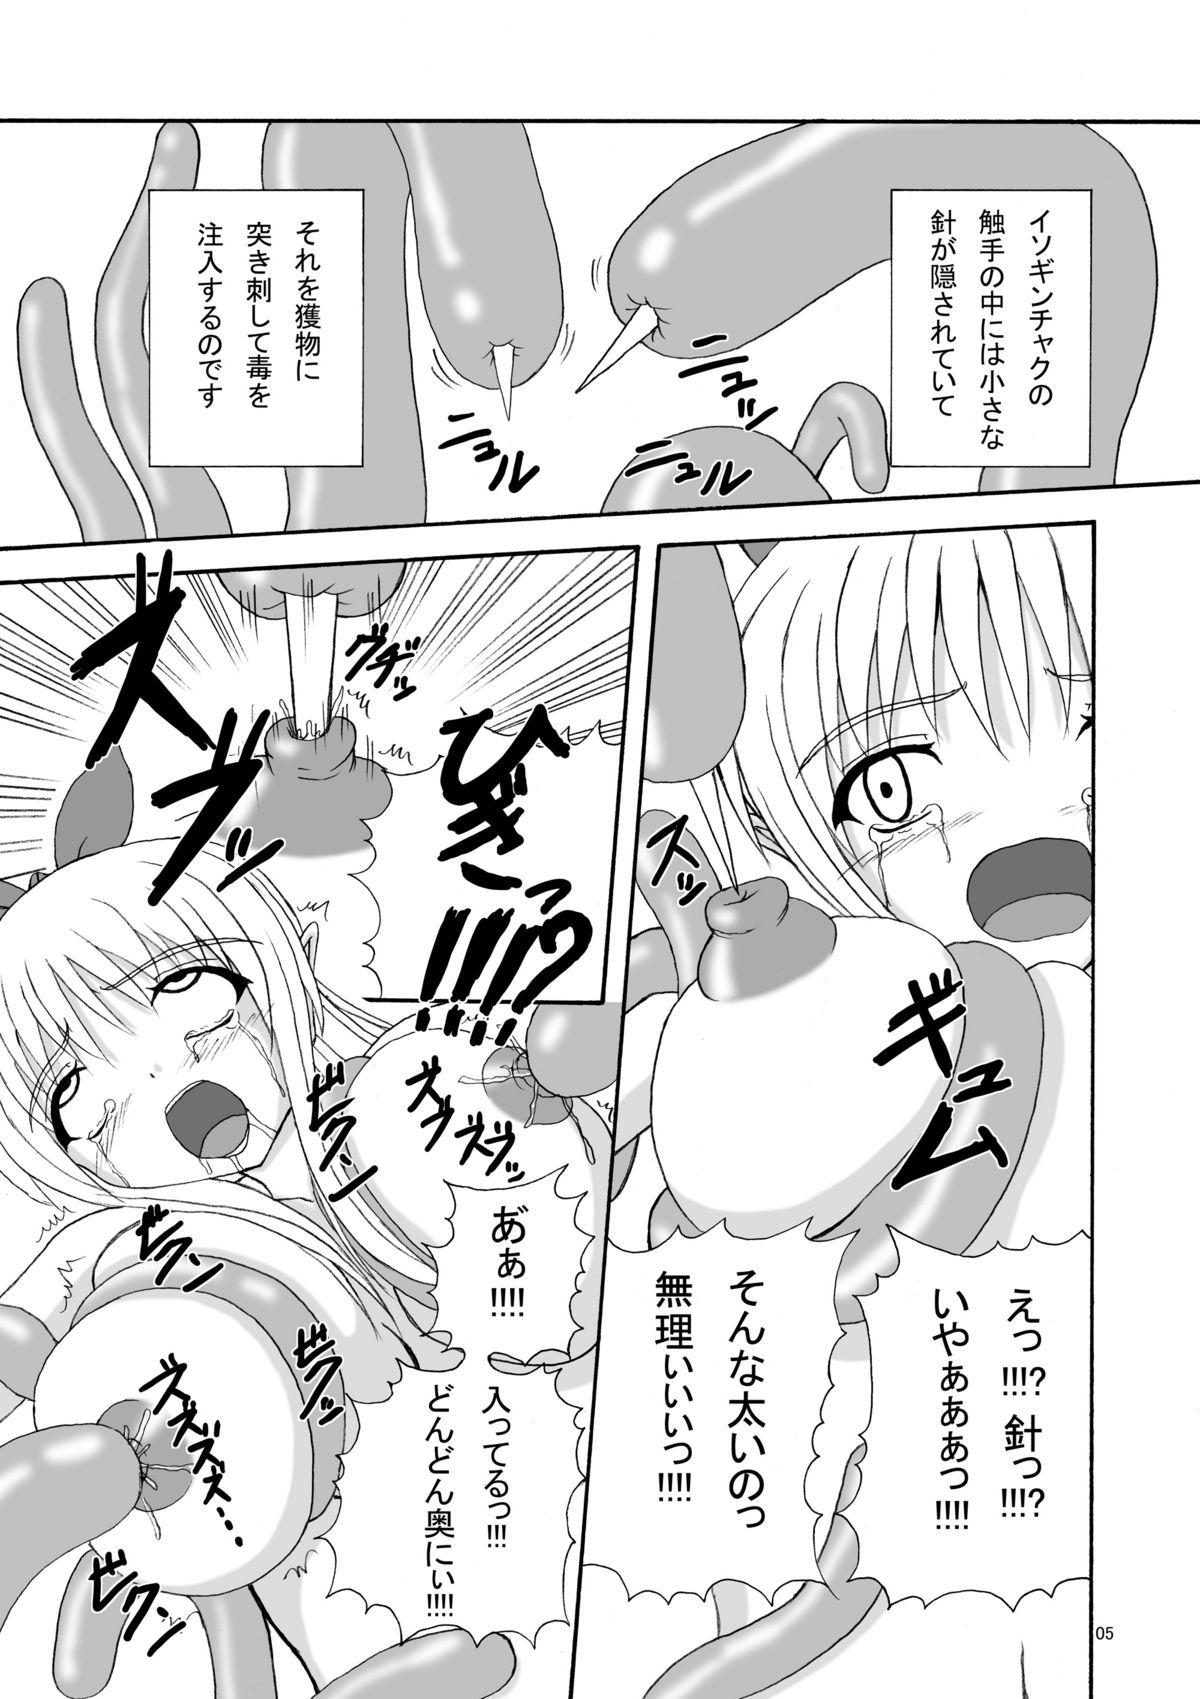 Rimming Umi Monogatari - Umi monogatari Hardcore Sex - Page 4